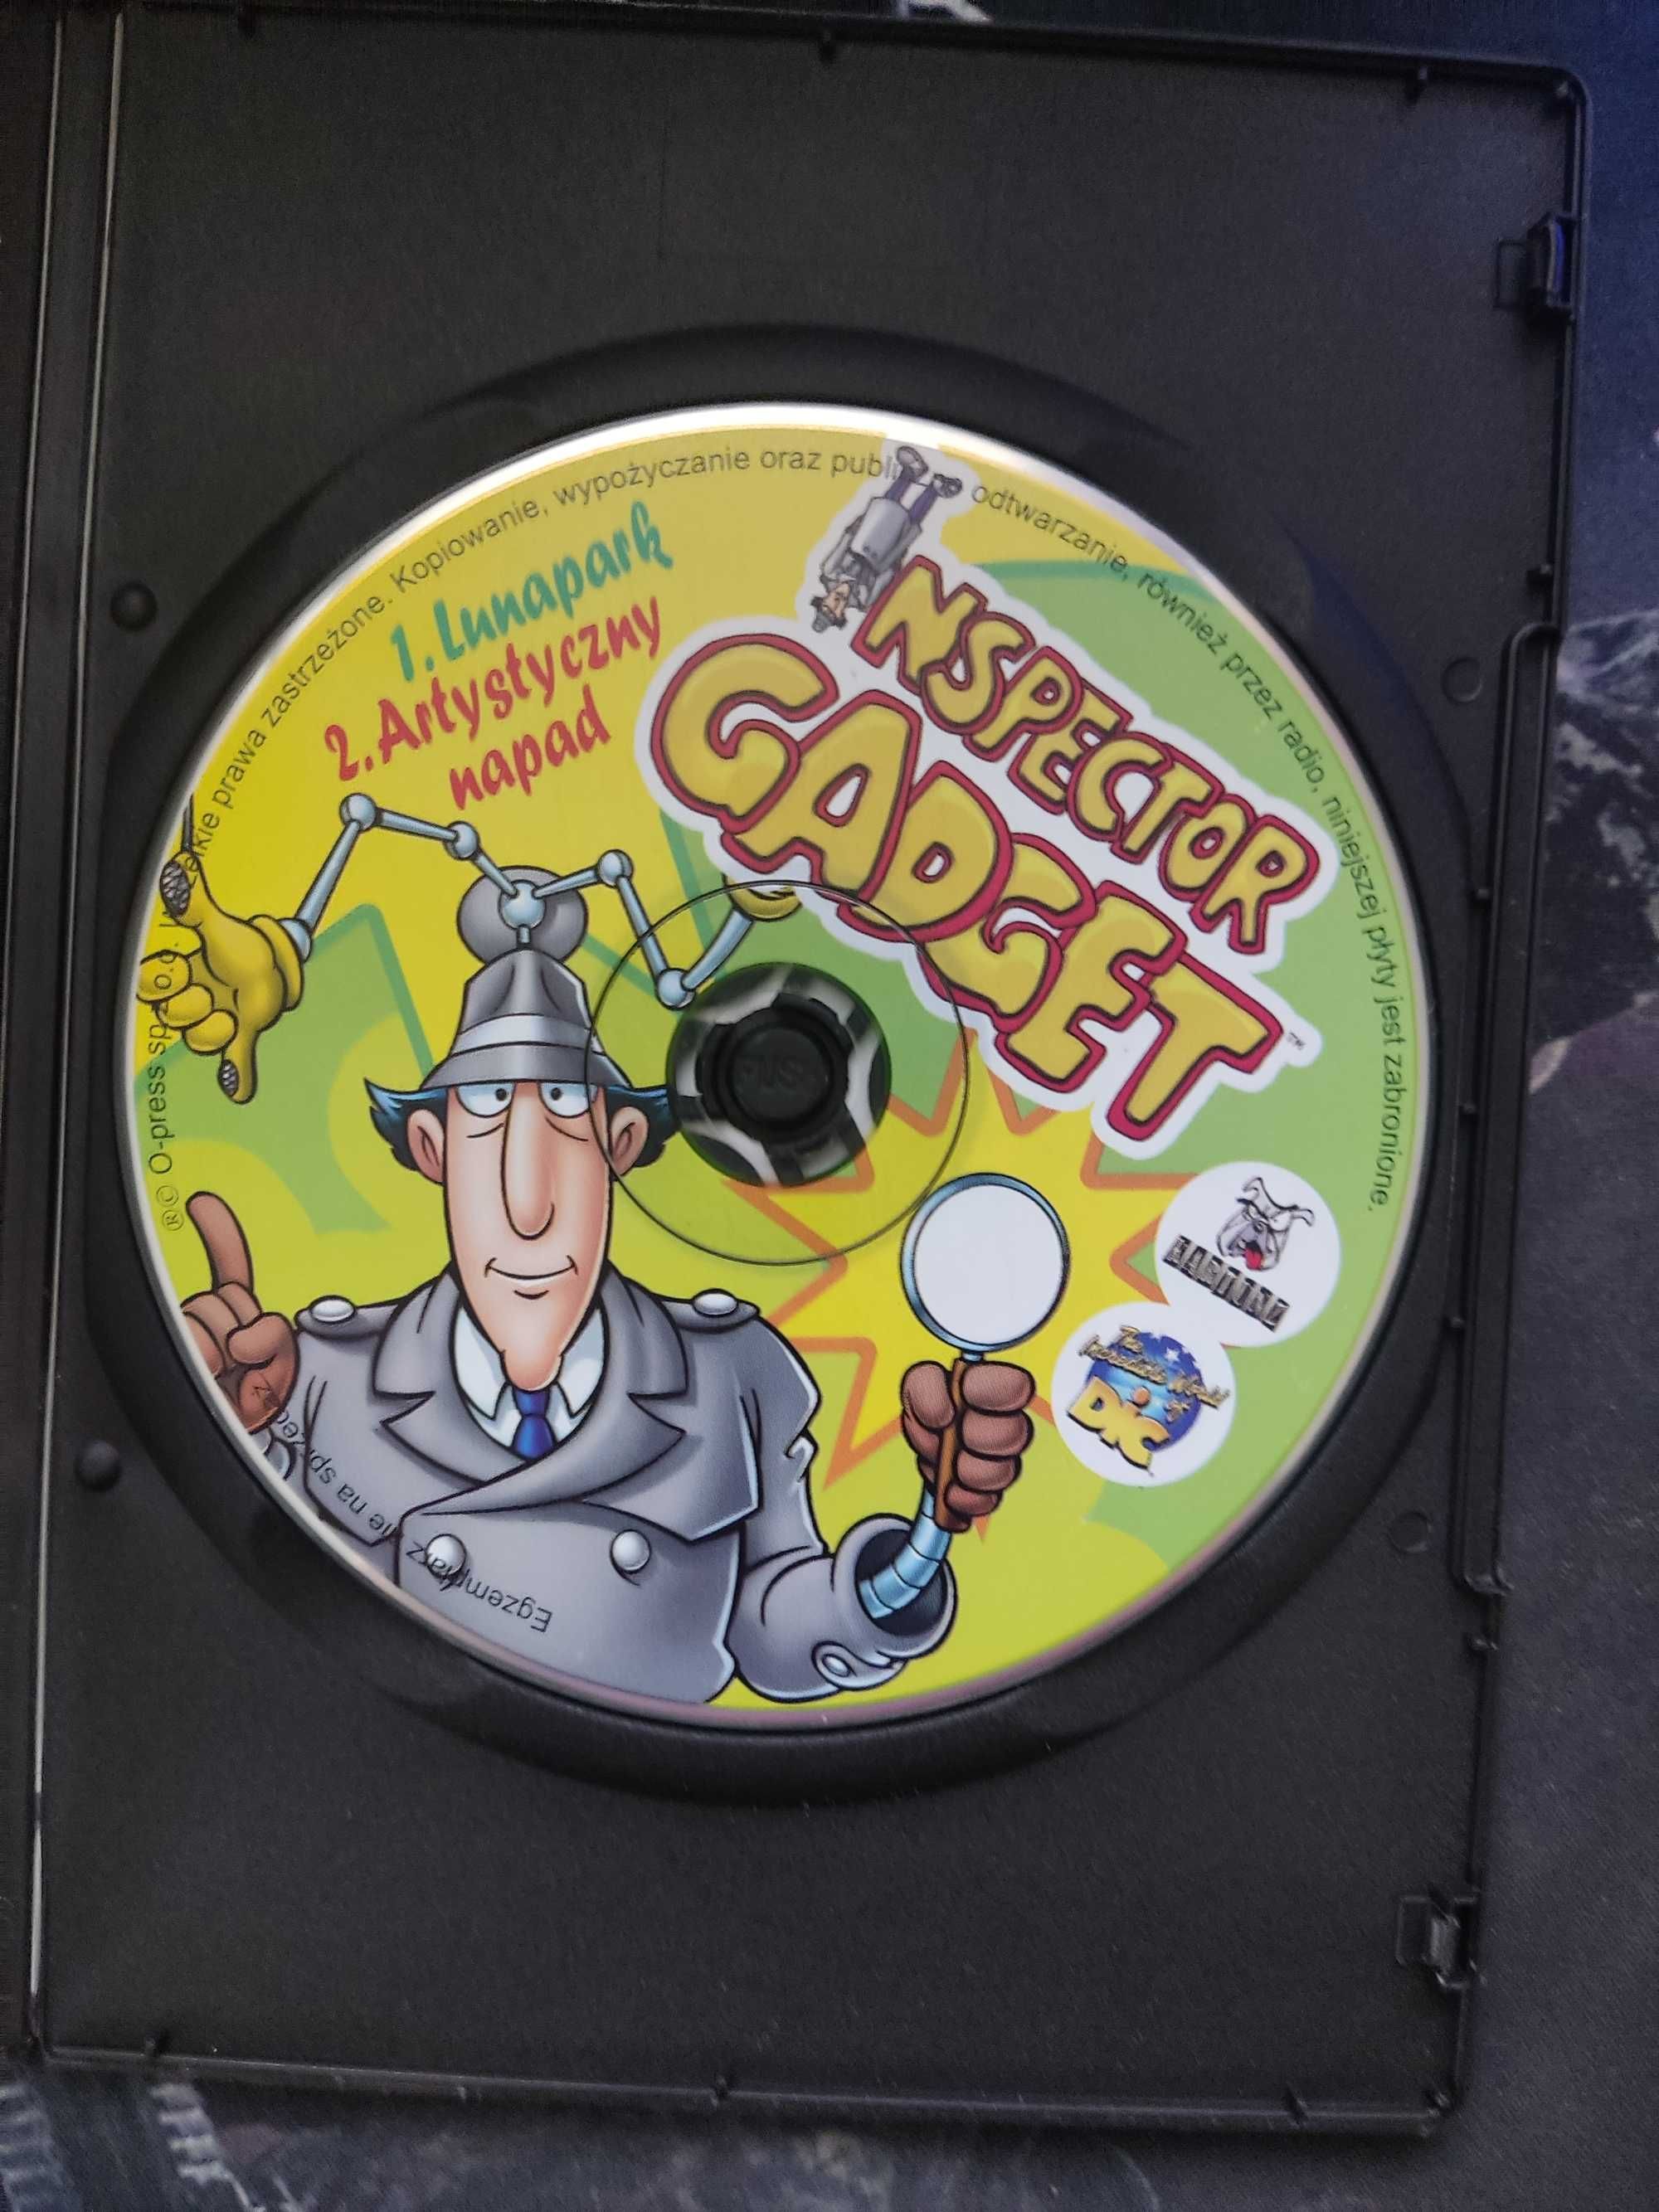 Inspector Gadget "Lunapark", "Artystyczny napad" DVD-Video